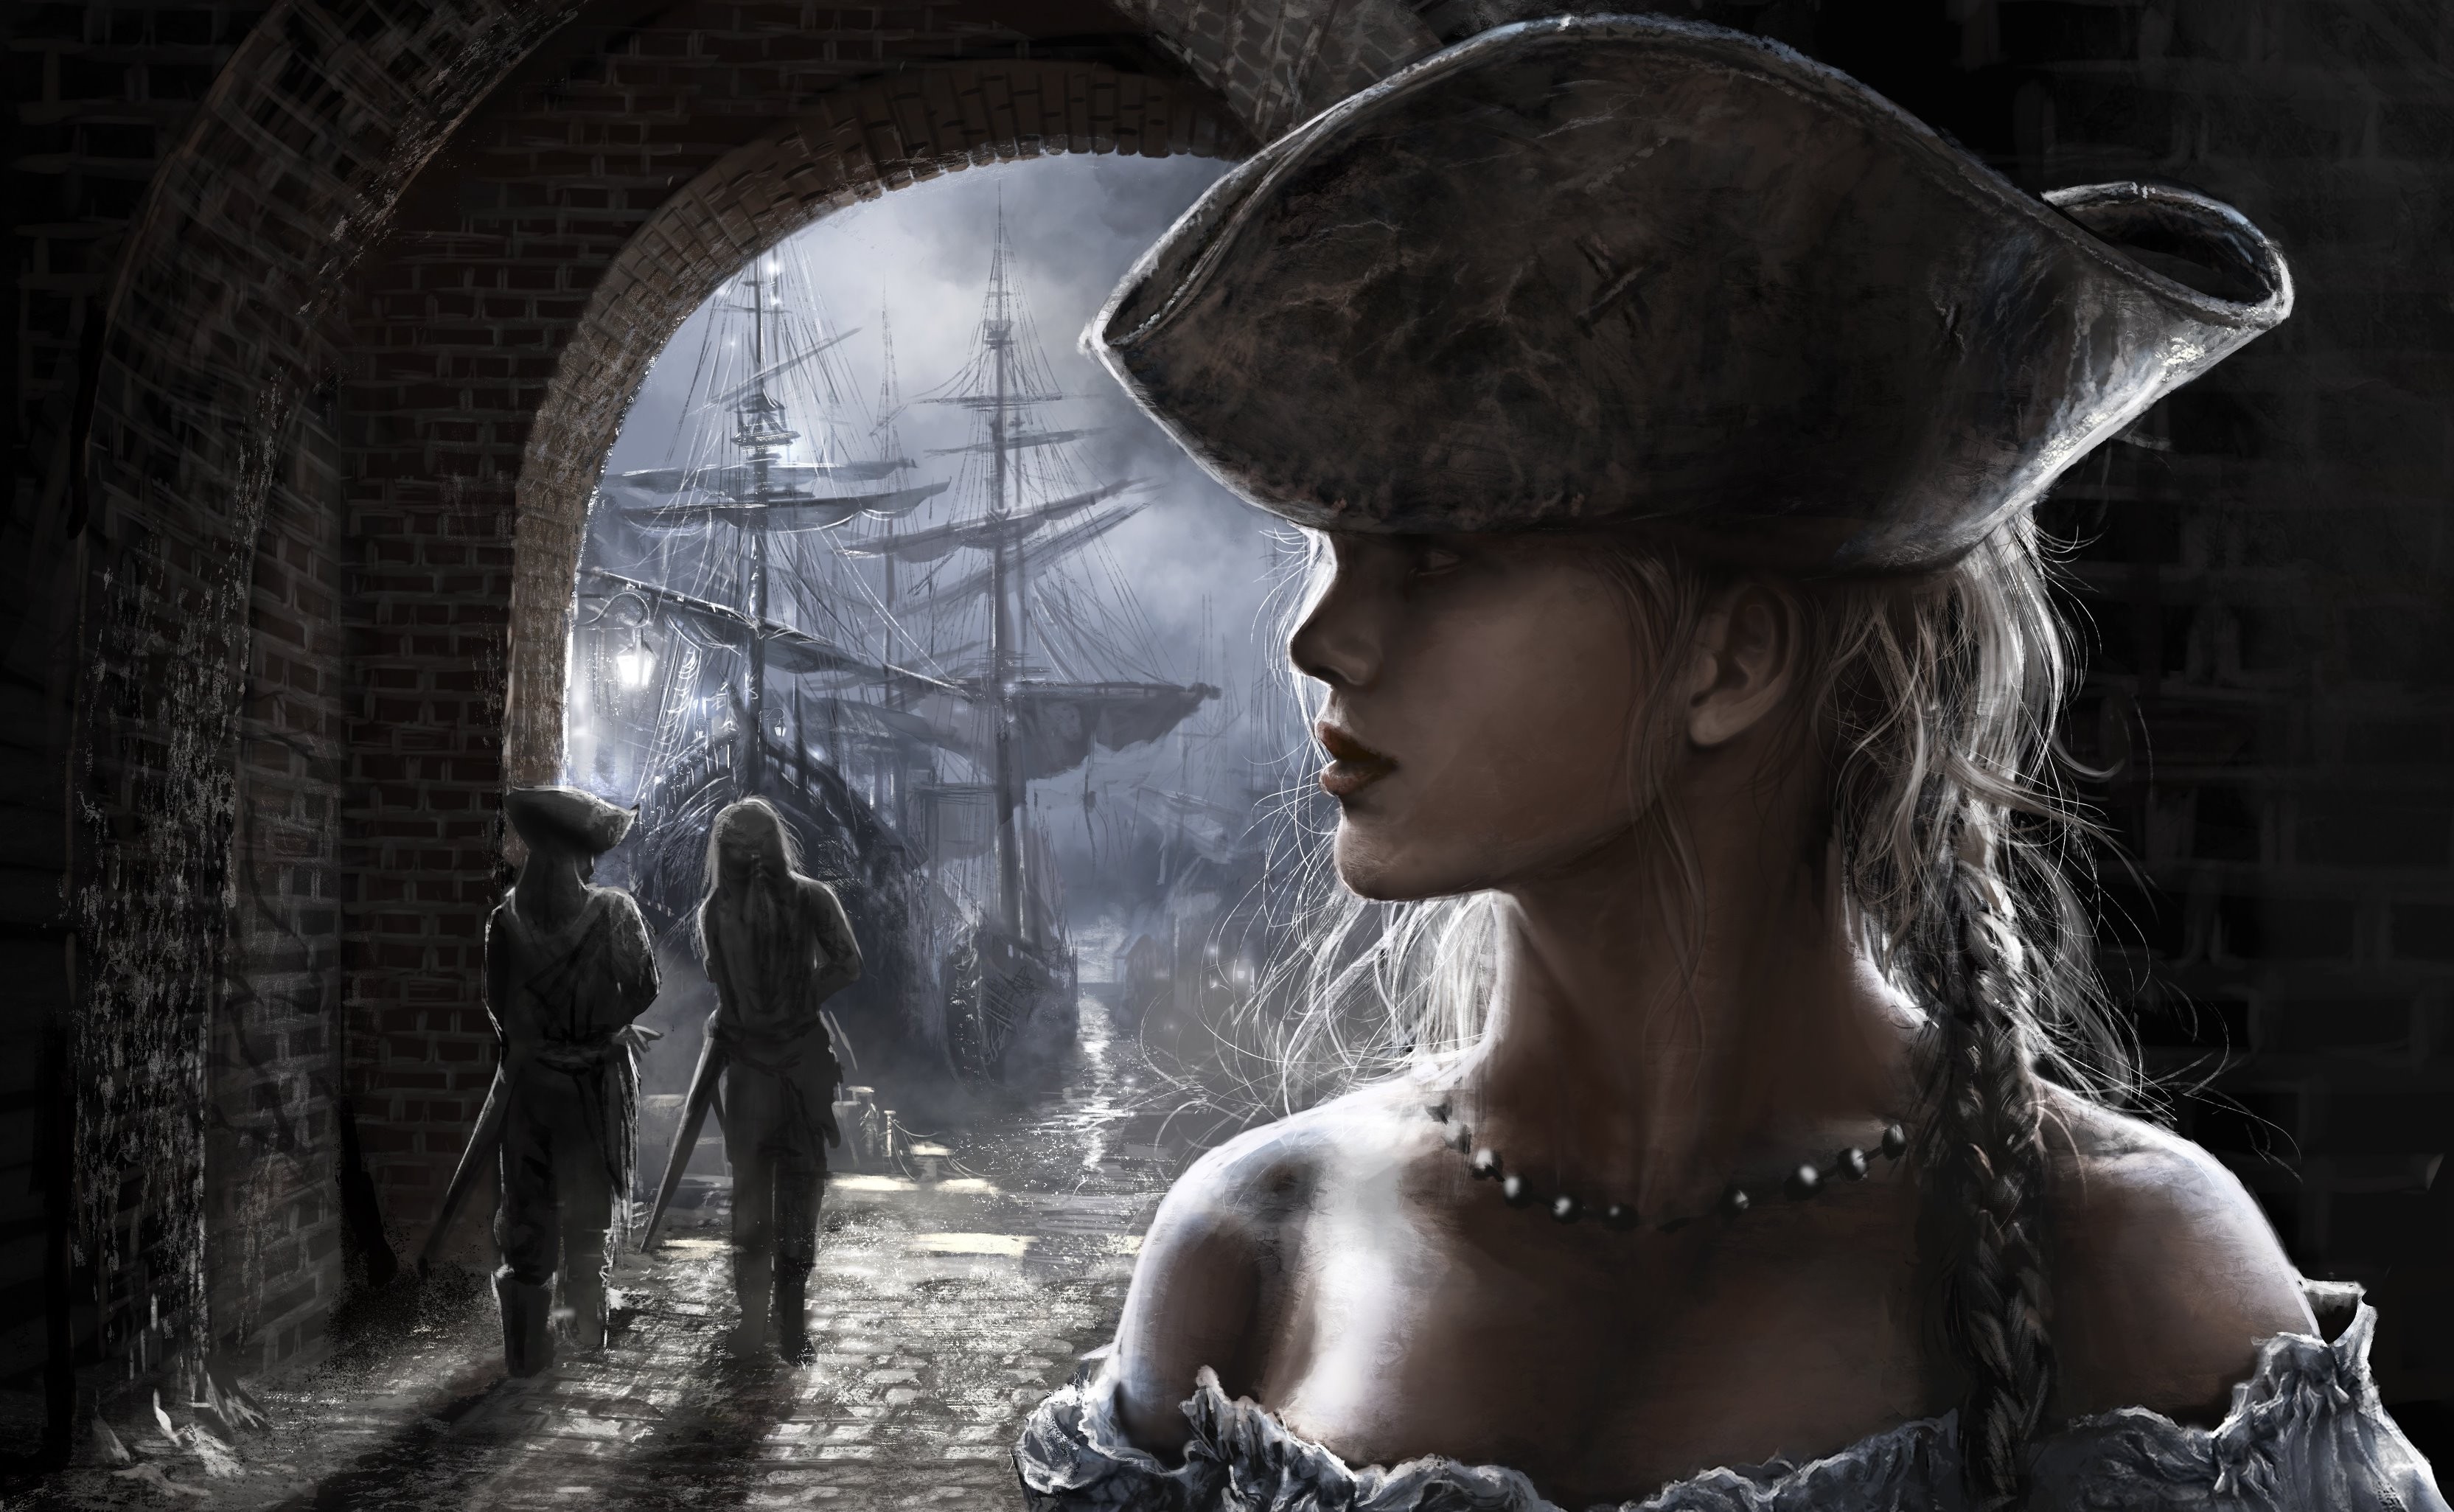 General 3329x2051 pirates fantasy art fantasy girl artwork women face profile pirate girl hat women with hats ship vehicle sailing ship rigging (ship) digital art